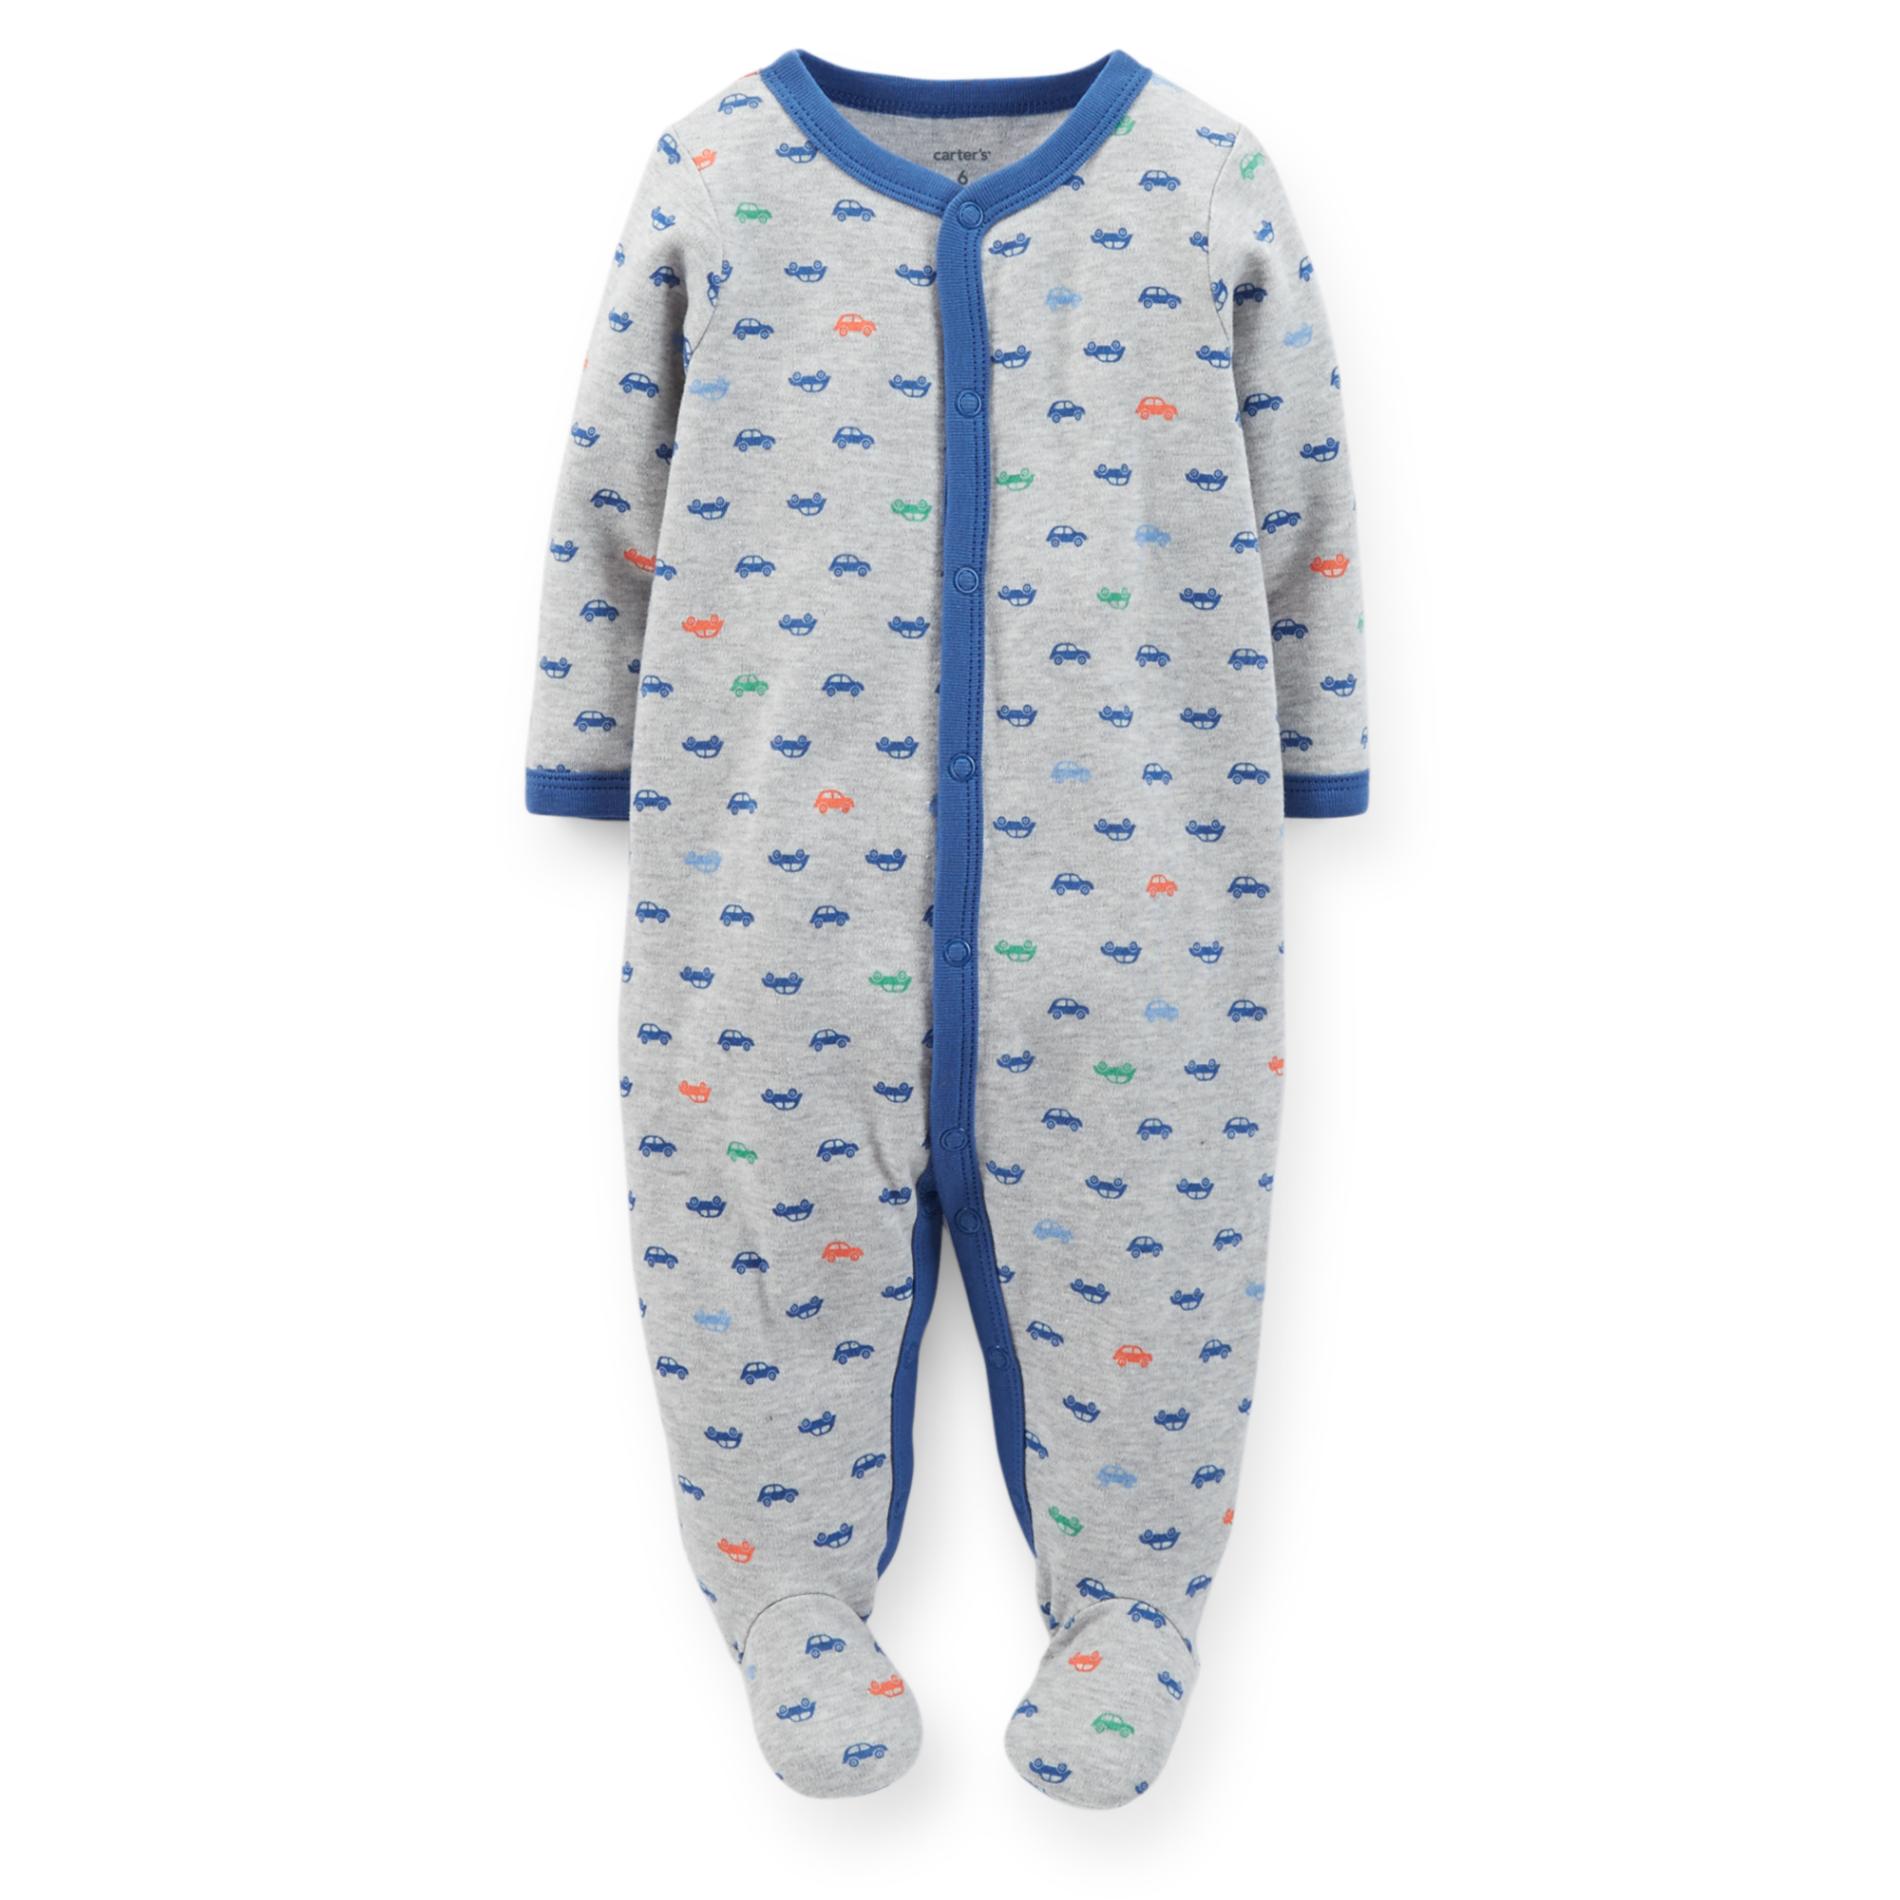 Carter's Newborn Boy's Snap-Front Sleeper Pajamas - Cars